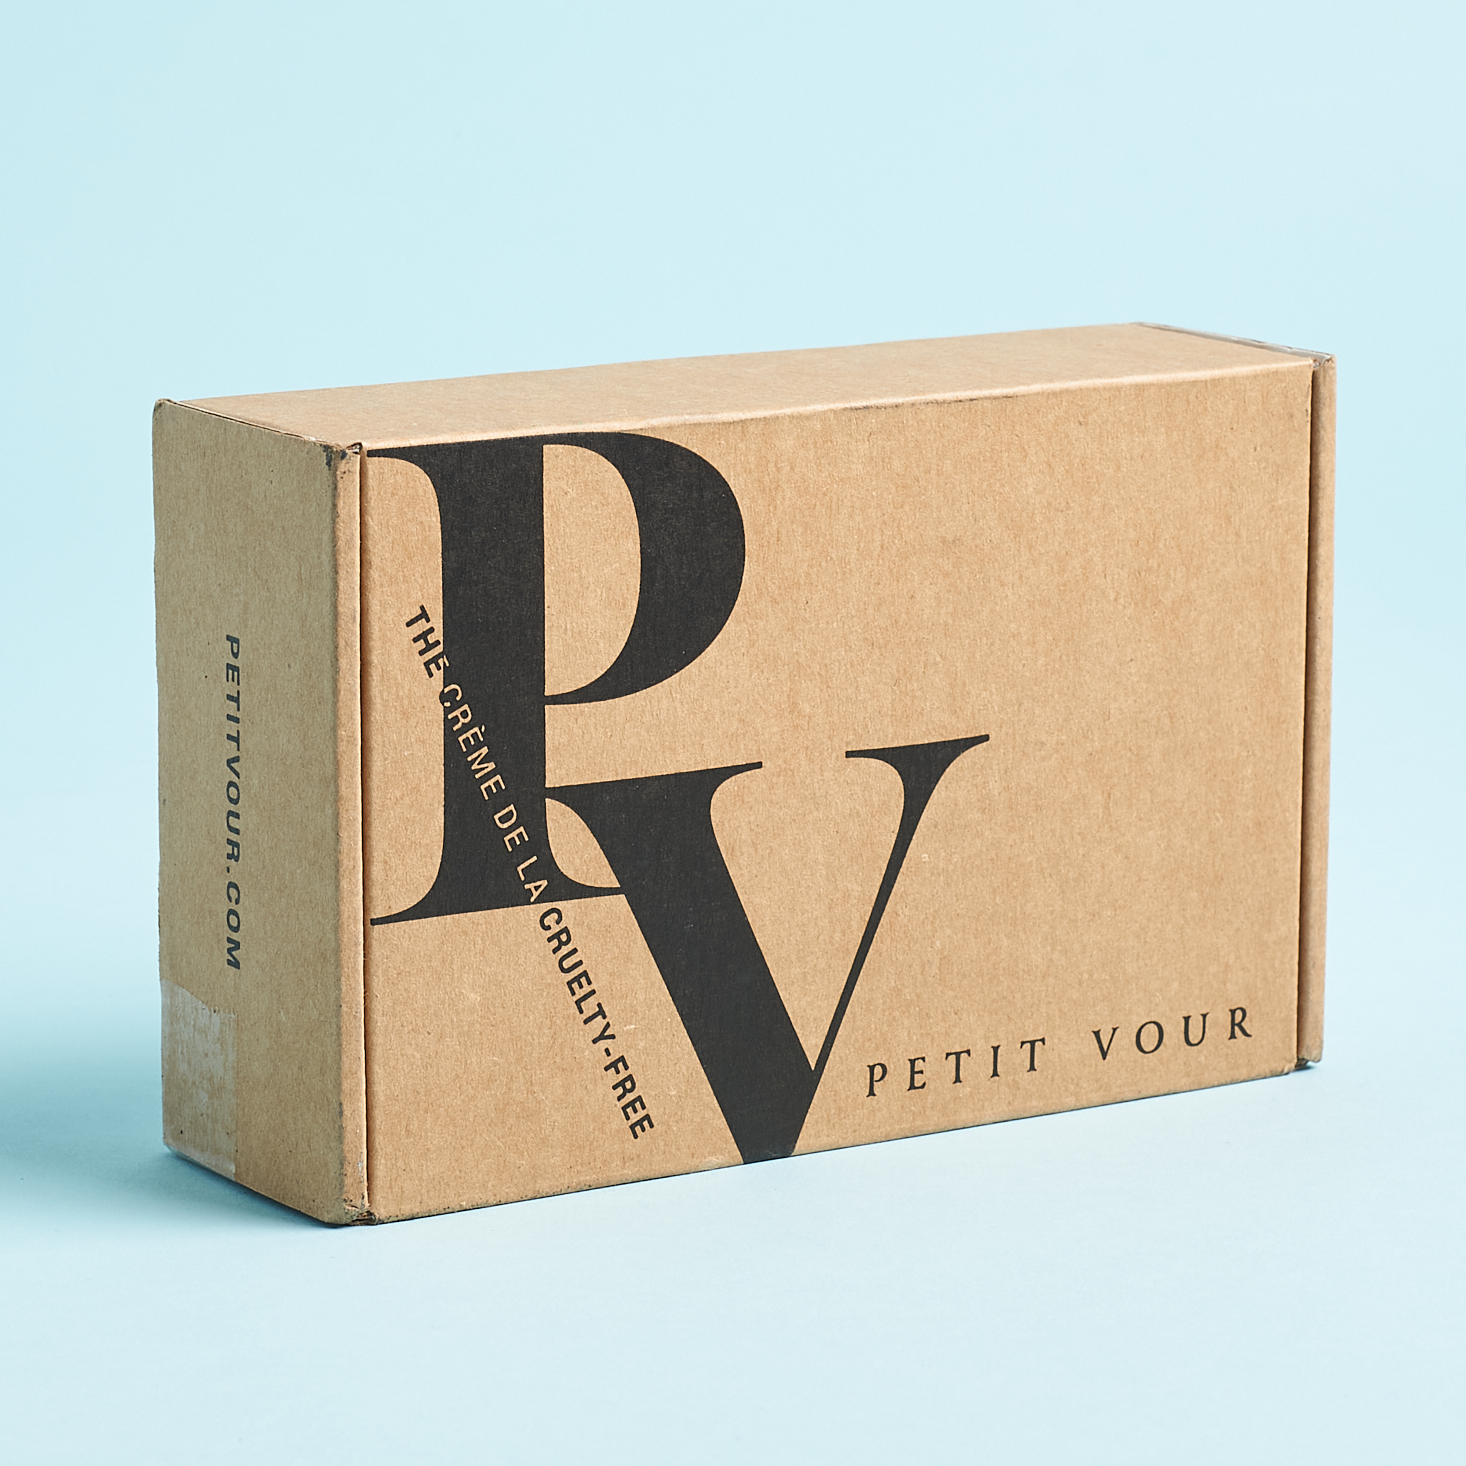 Petit Vour Vegan Beauty Box Review + Coupon – December 2020